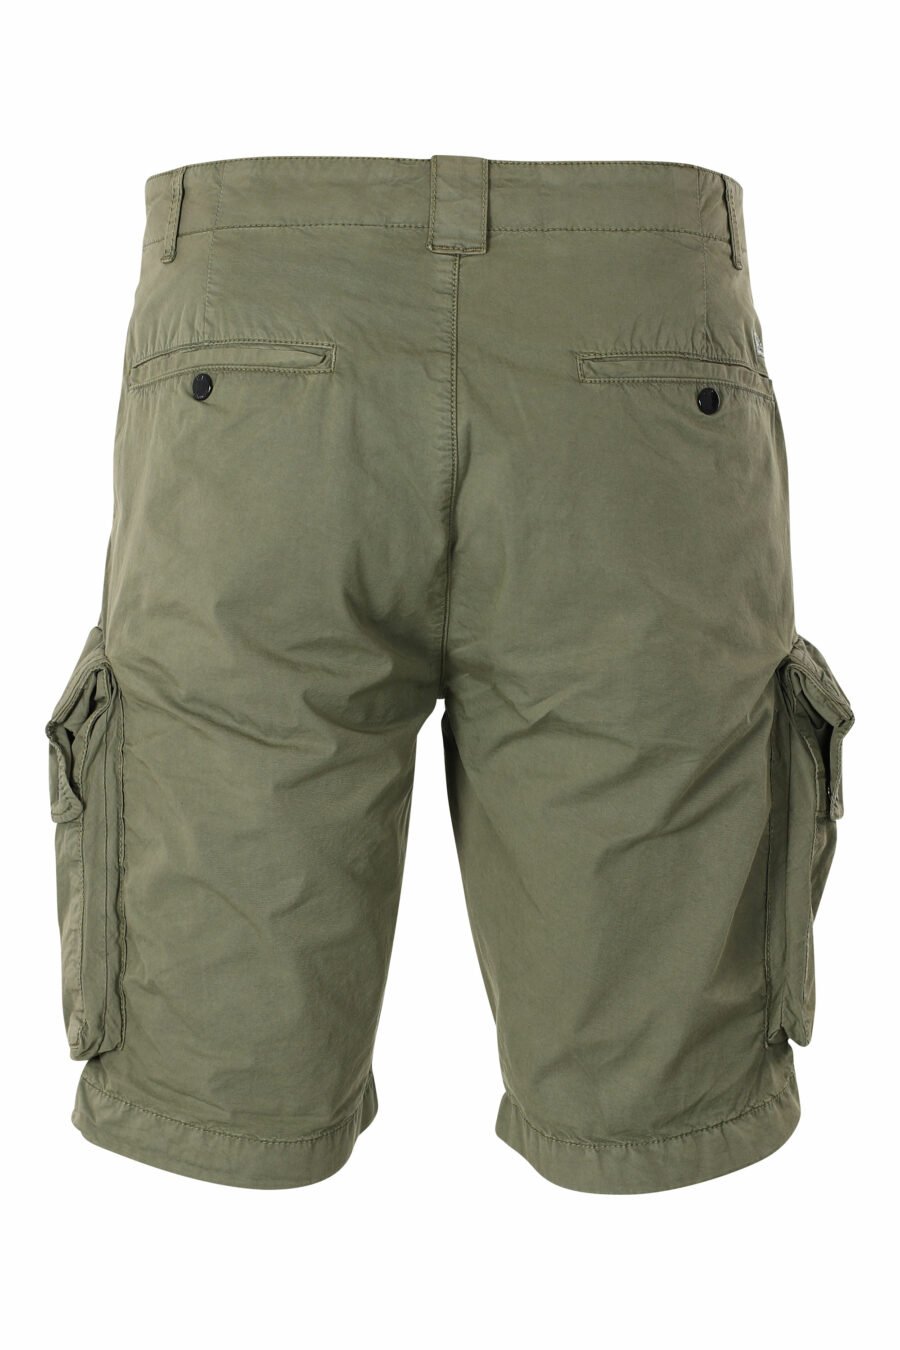 Pantalón corto verde militar con bolsillos laterales y minilogo circular - IMG 9582